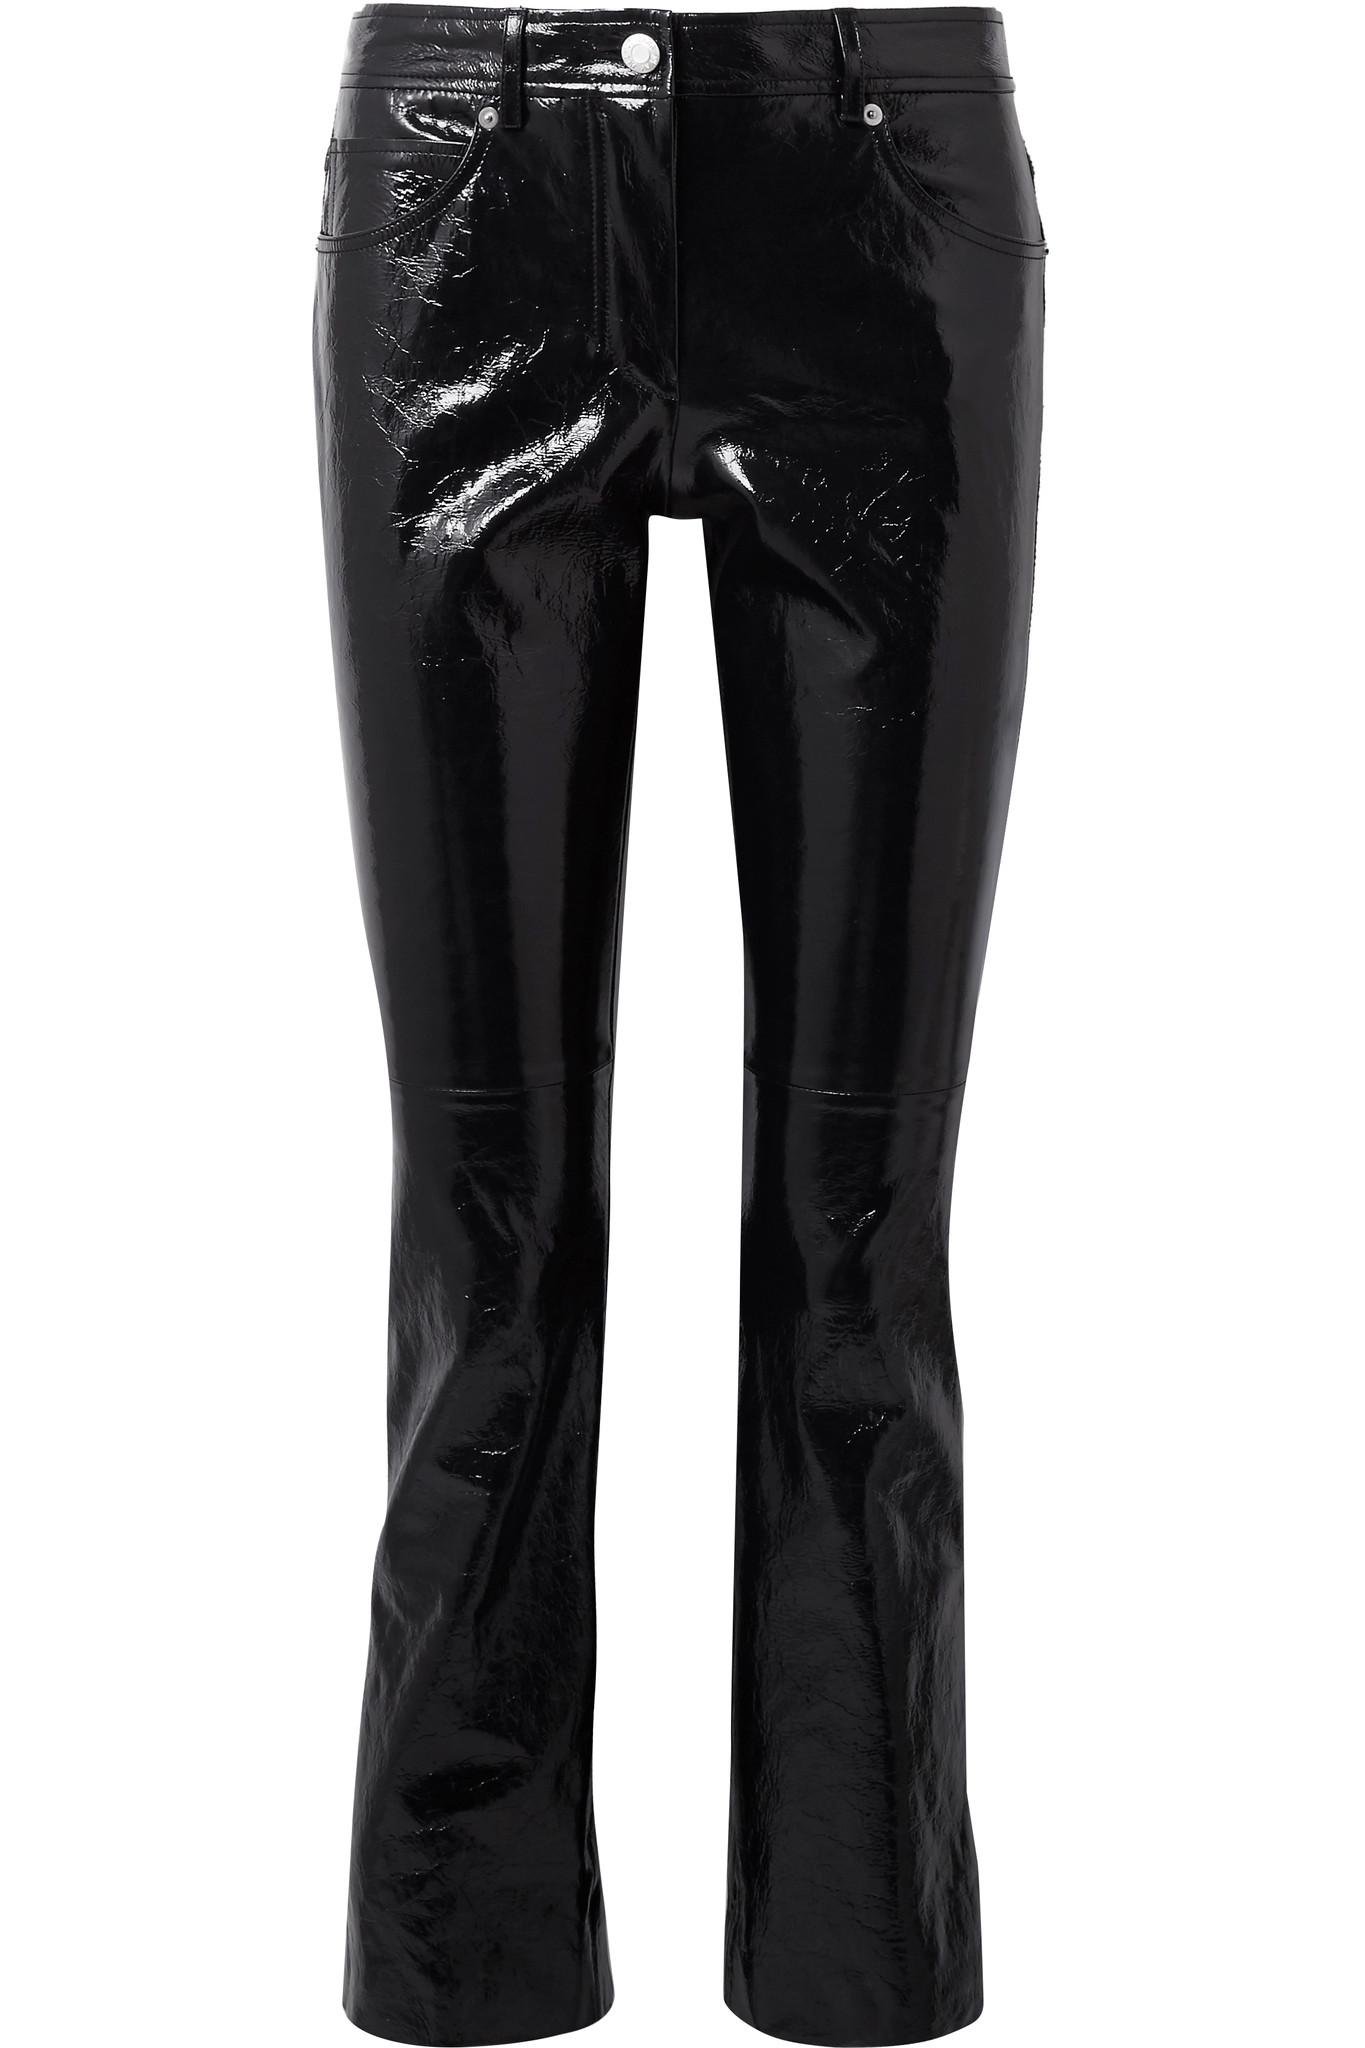 Lyst - Helmut Lang Crinkled Patent-leather Slim-leg Pants in Black